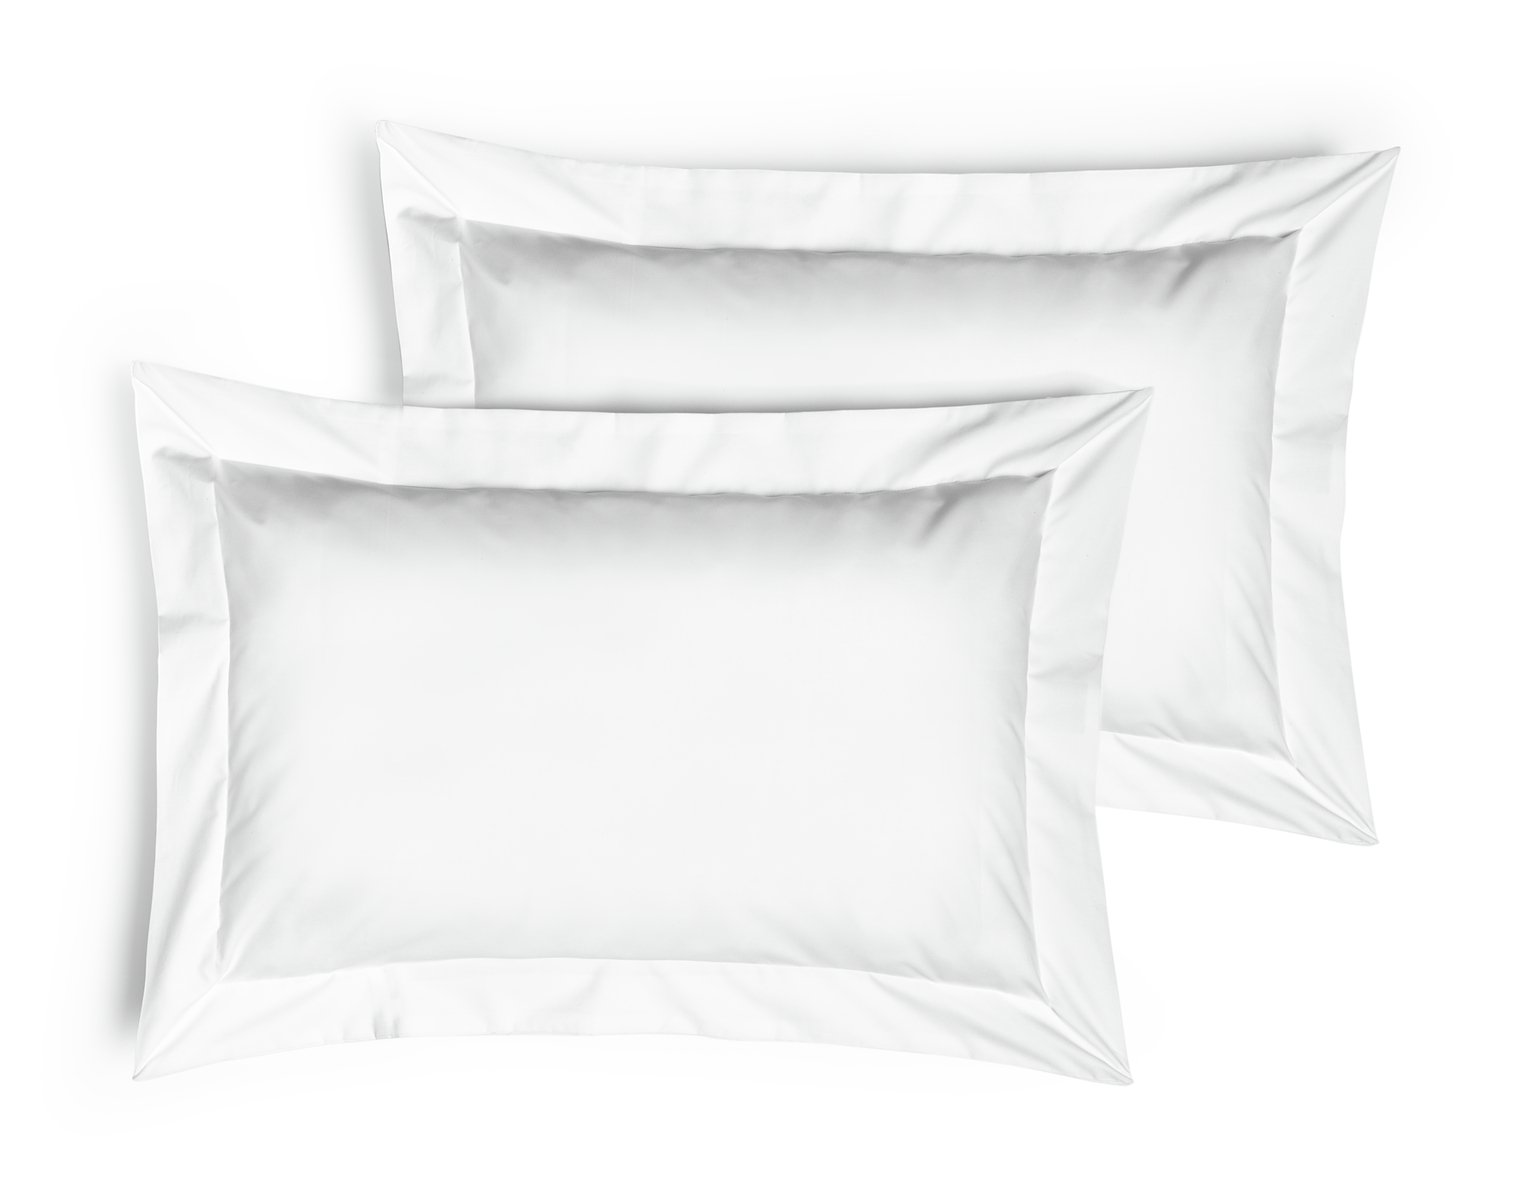 Habitat Pure Cotton 200TC Oxford Pillowcase Pair- White